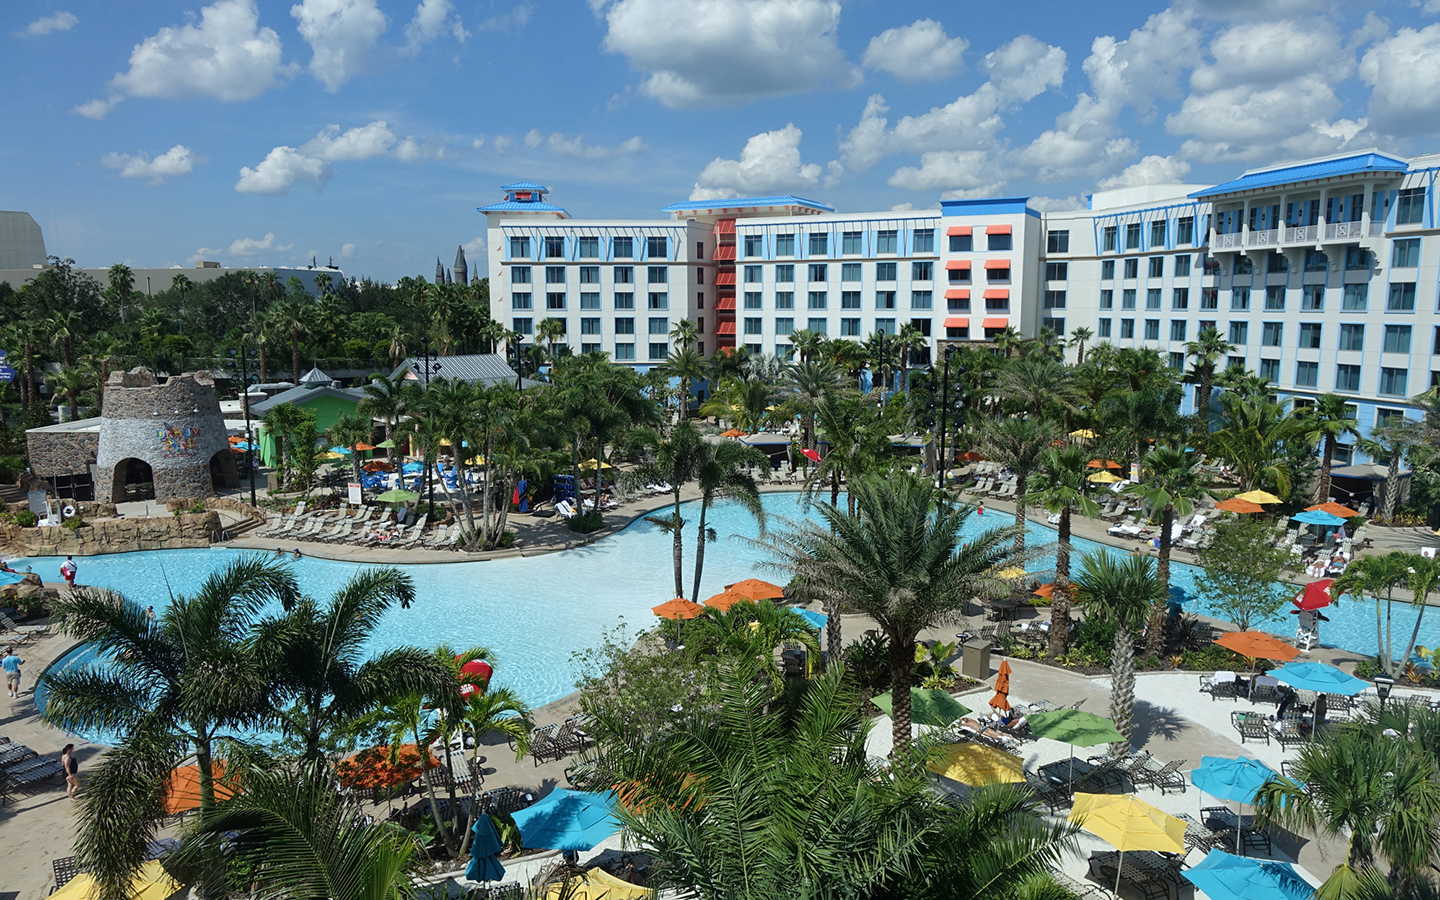 Four Ways to Choose the Best Universal Orlando Resort Hotel